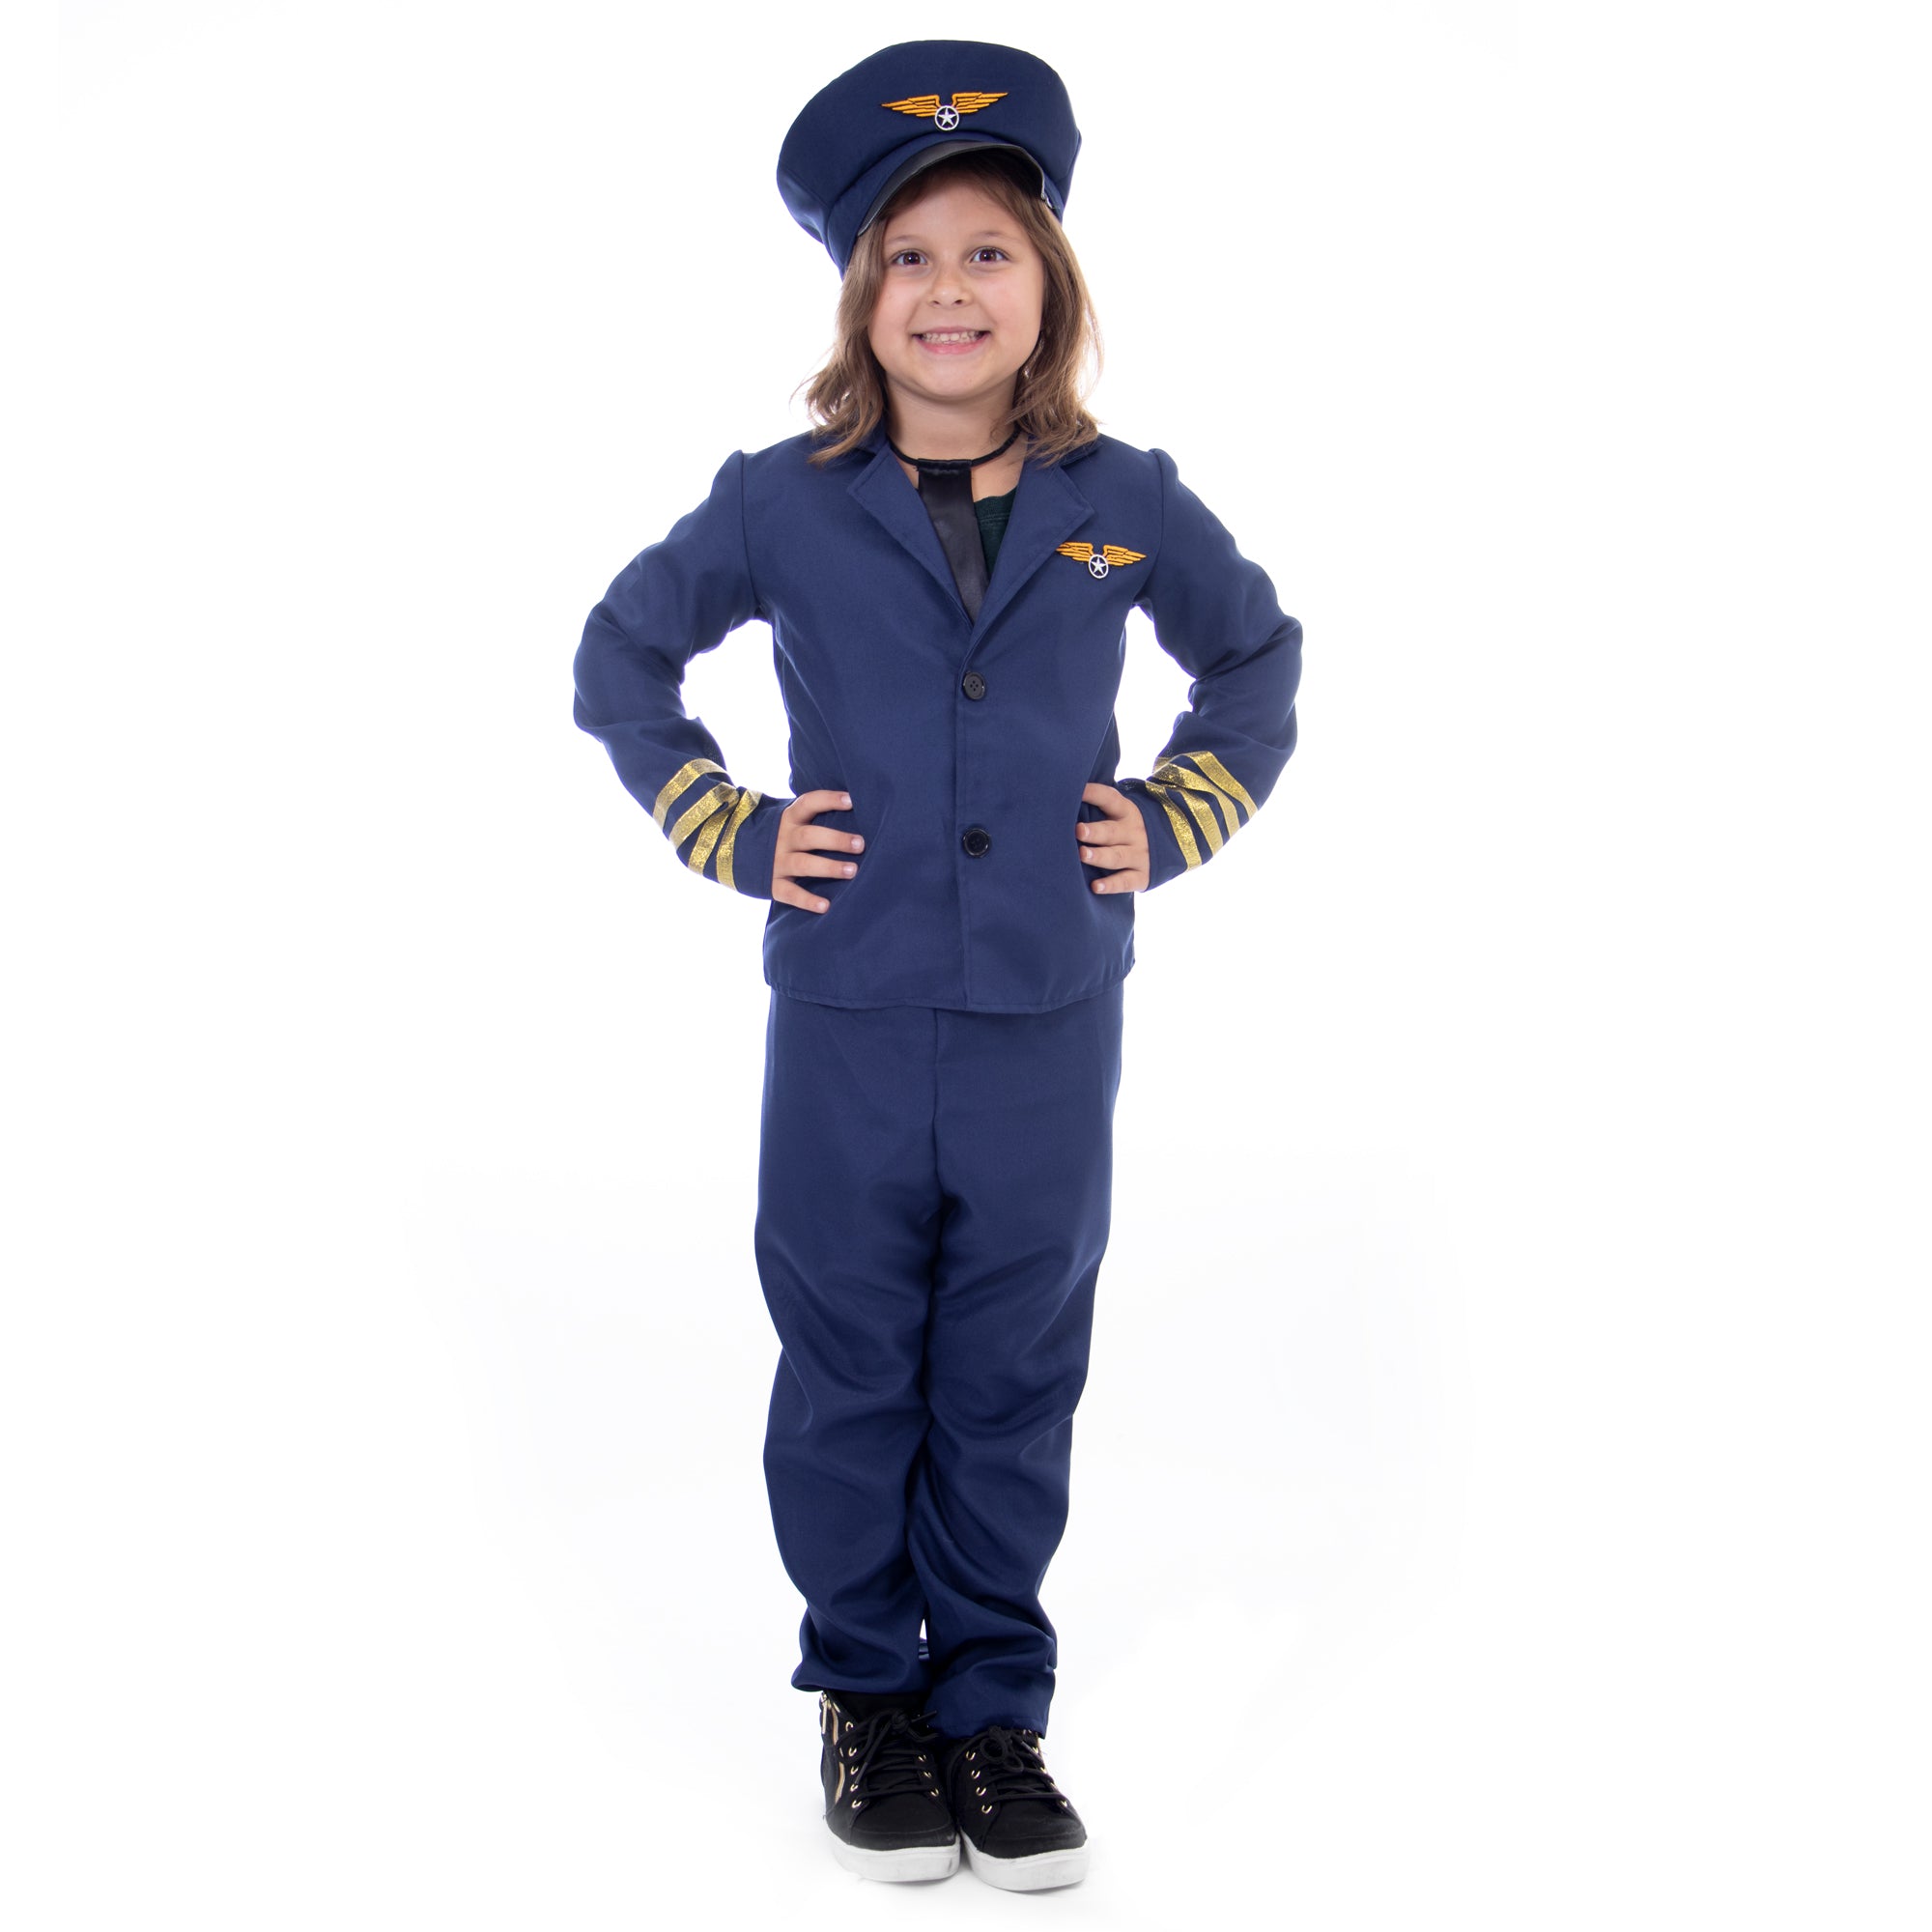 Airplane Pilot - Kids Halloween Costume